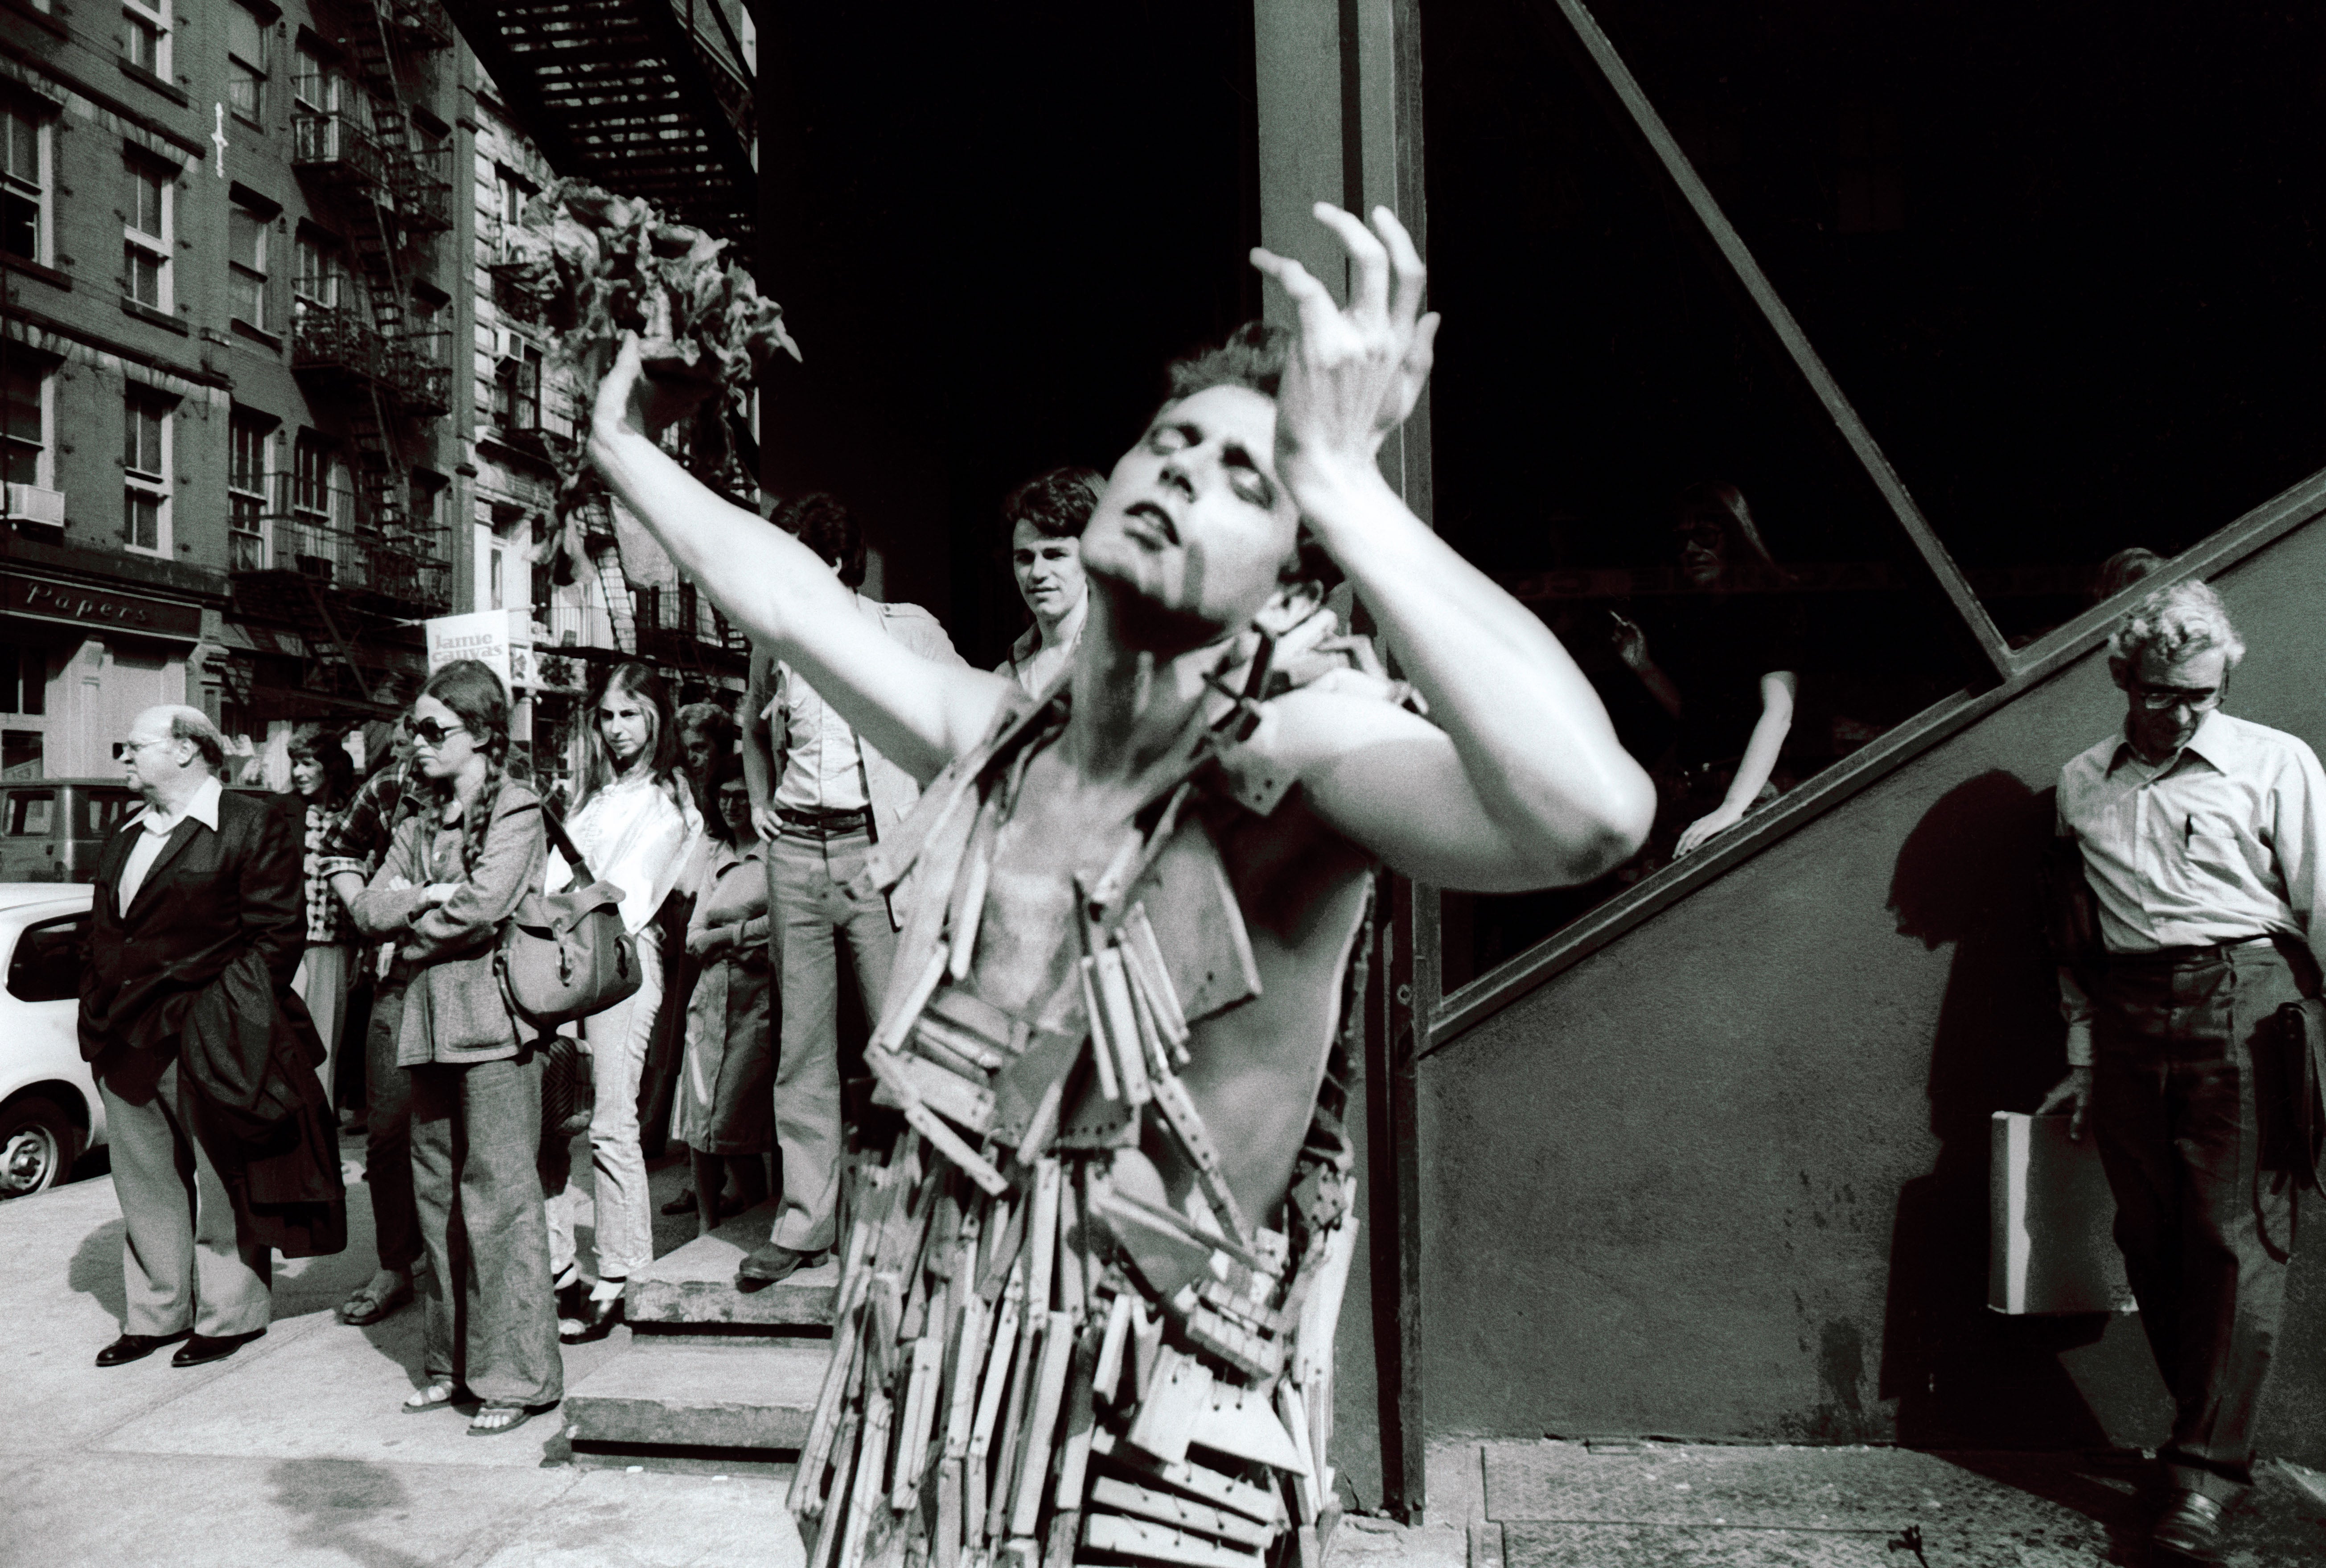 The performance artist Stephen Varble in Soho, New York, in 1978